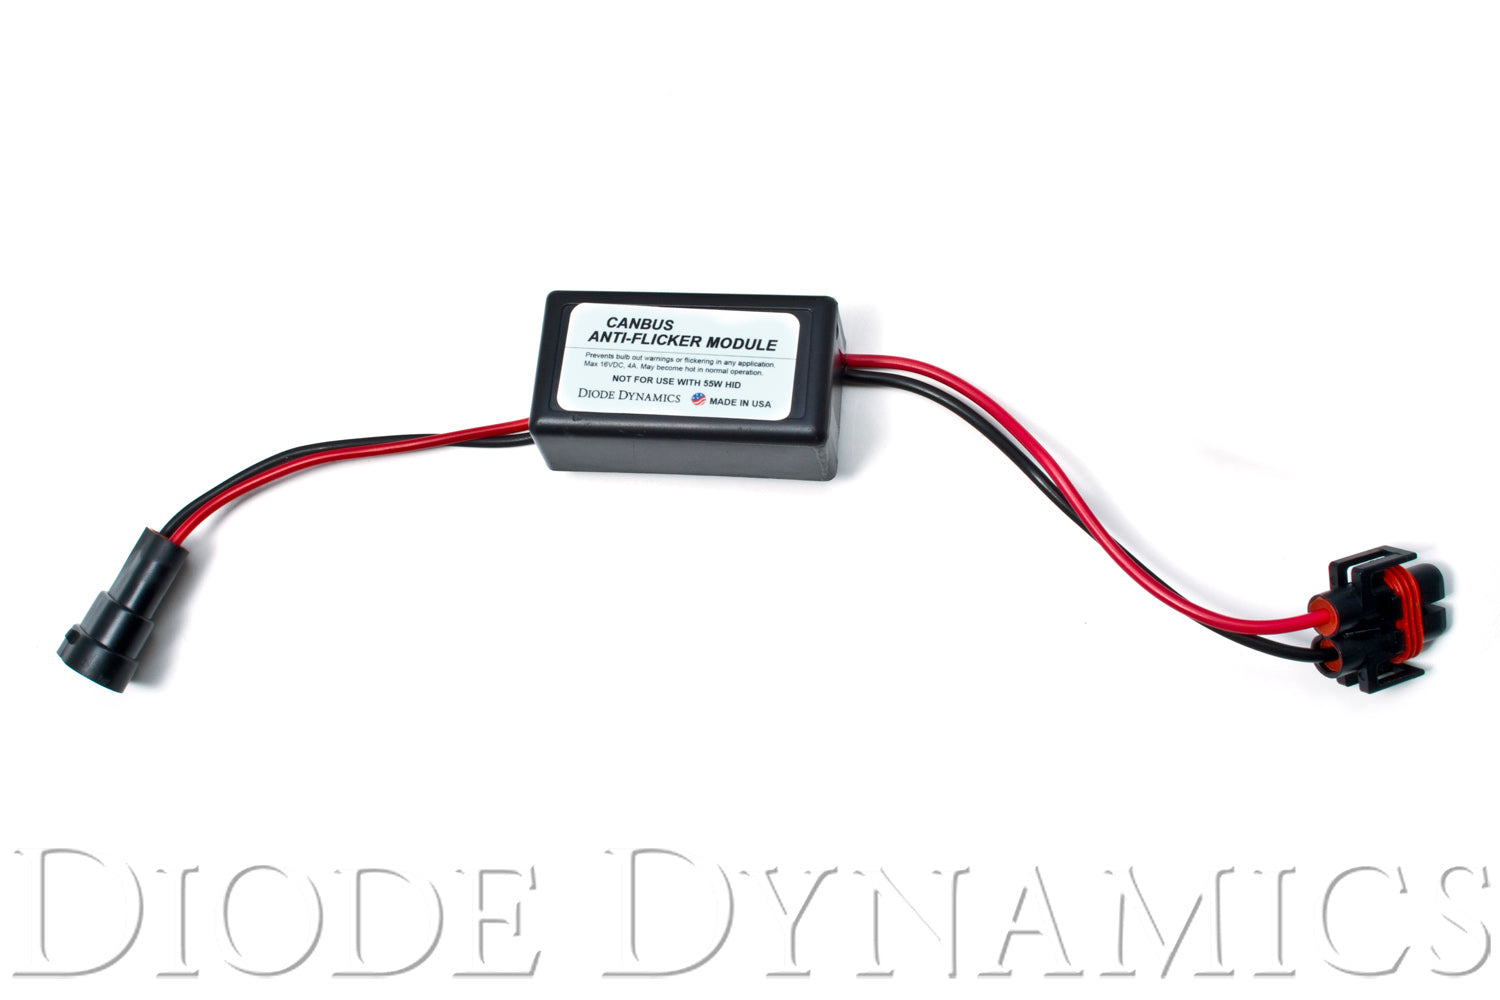 5202 Anti-Flicker Module Single Diode Dynamics